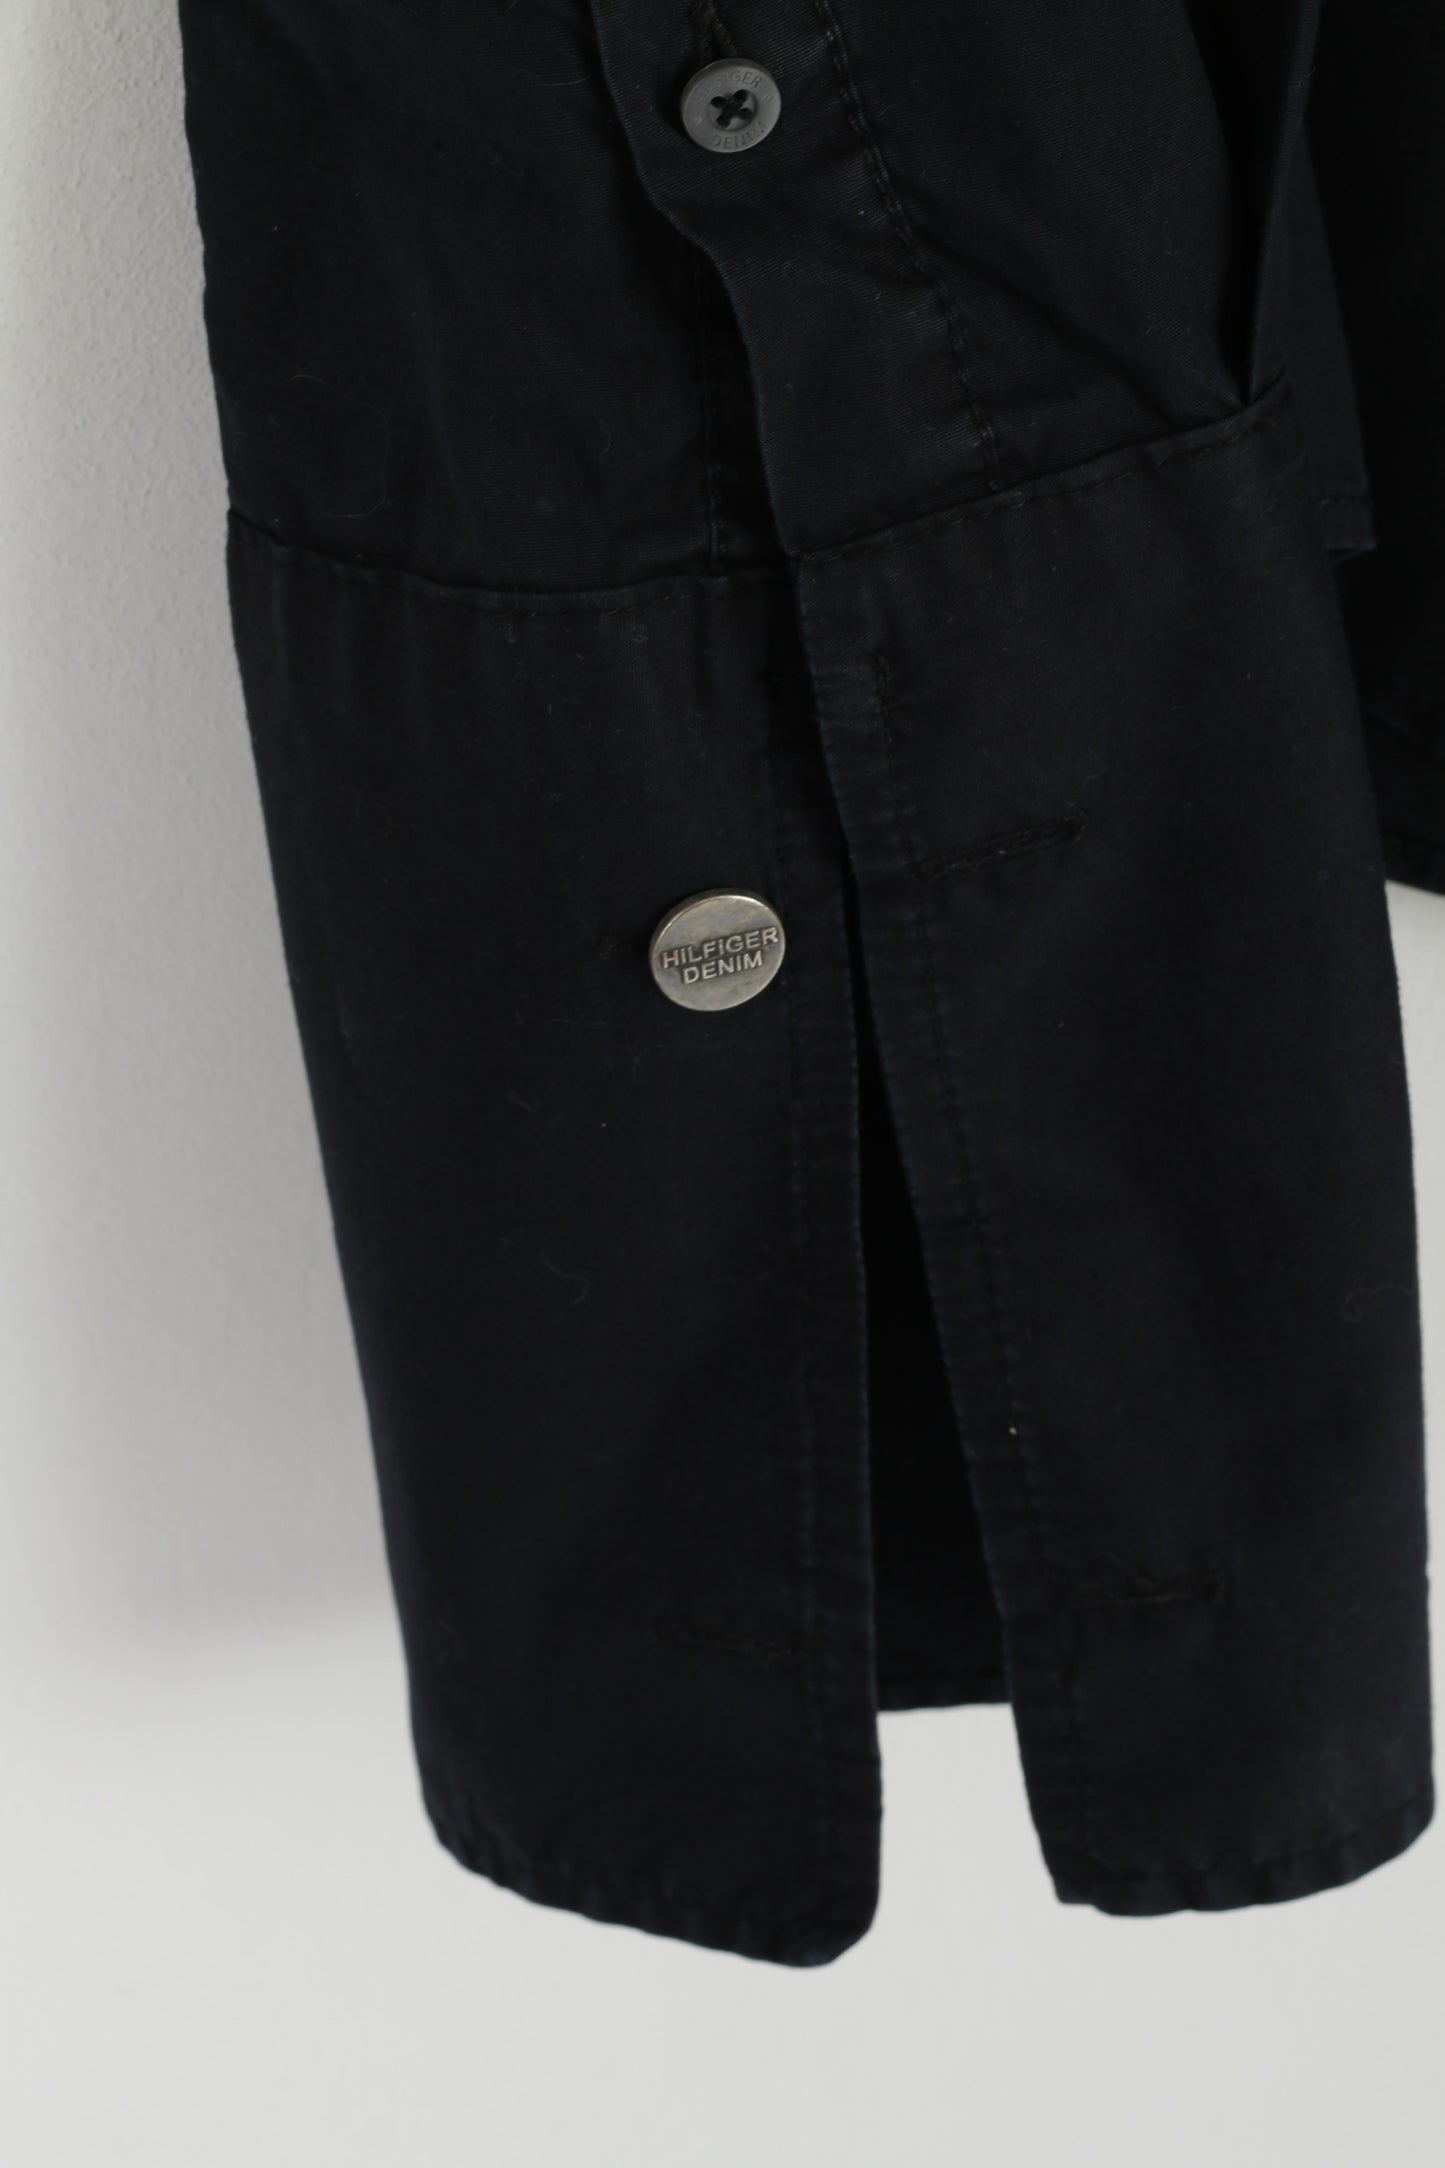 Hilfiger Denim Men M Casual Shirt Black Fit Cotton Cuff Long Sleeve Detailed Buttons Top